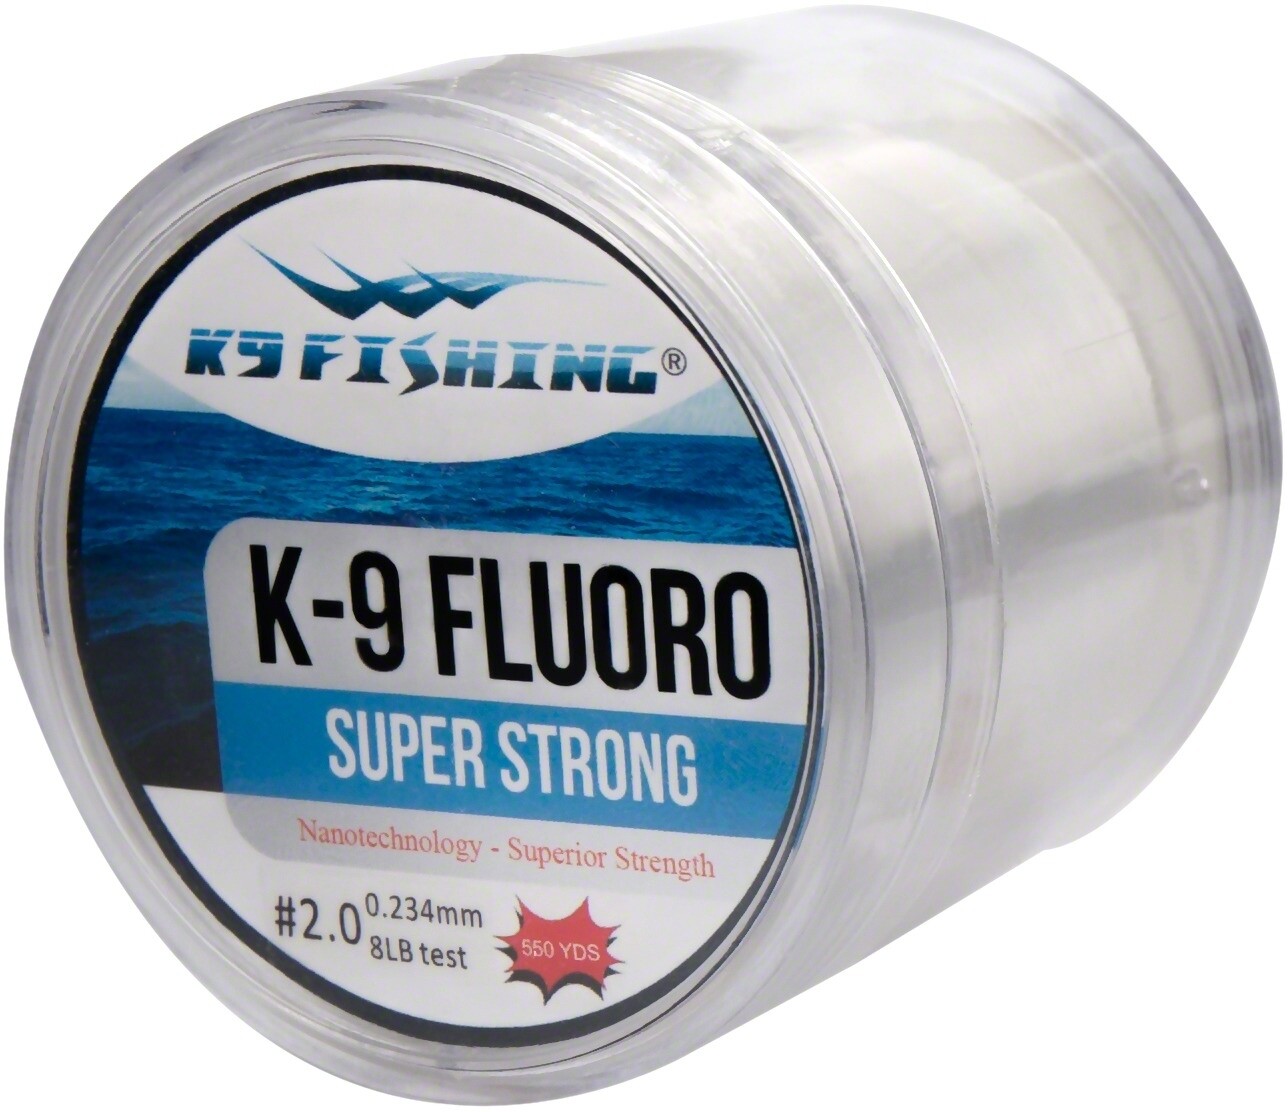 K9 550-14lb-CL Clear Fluoro Line 550 yard spool 14lb test